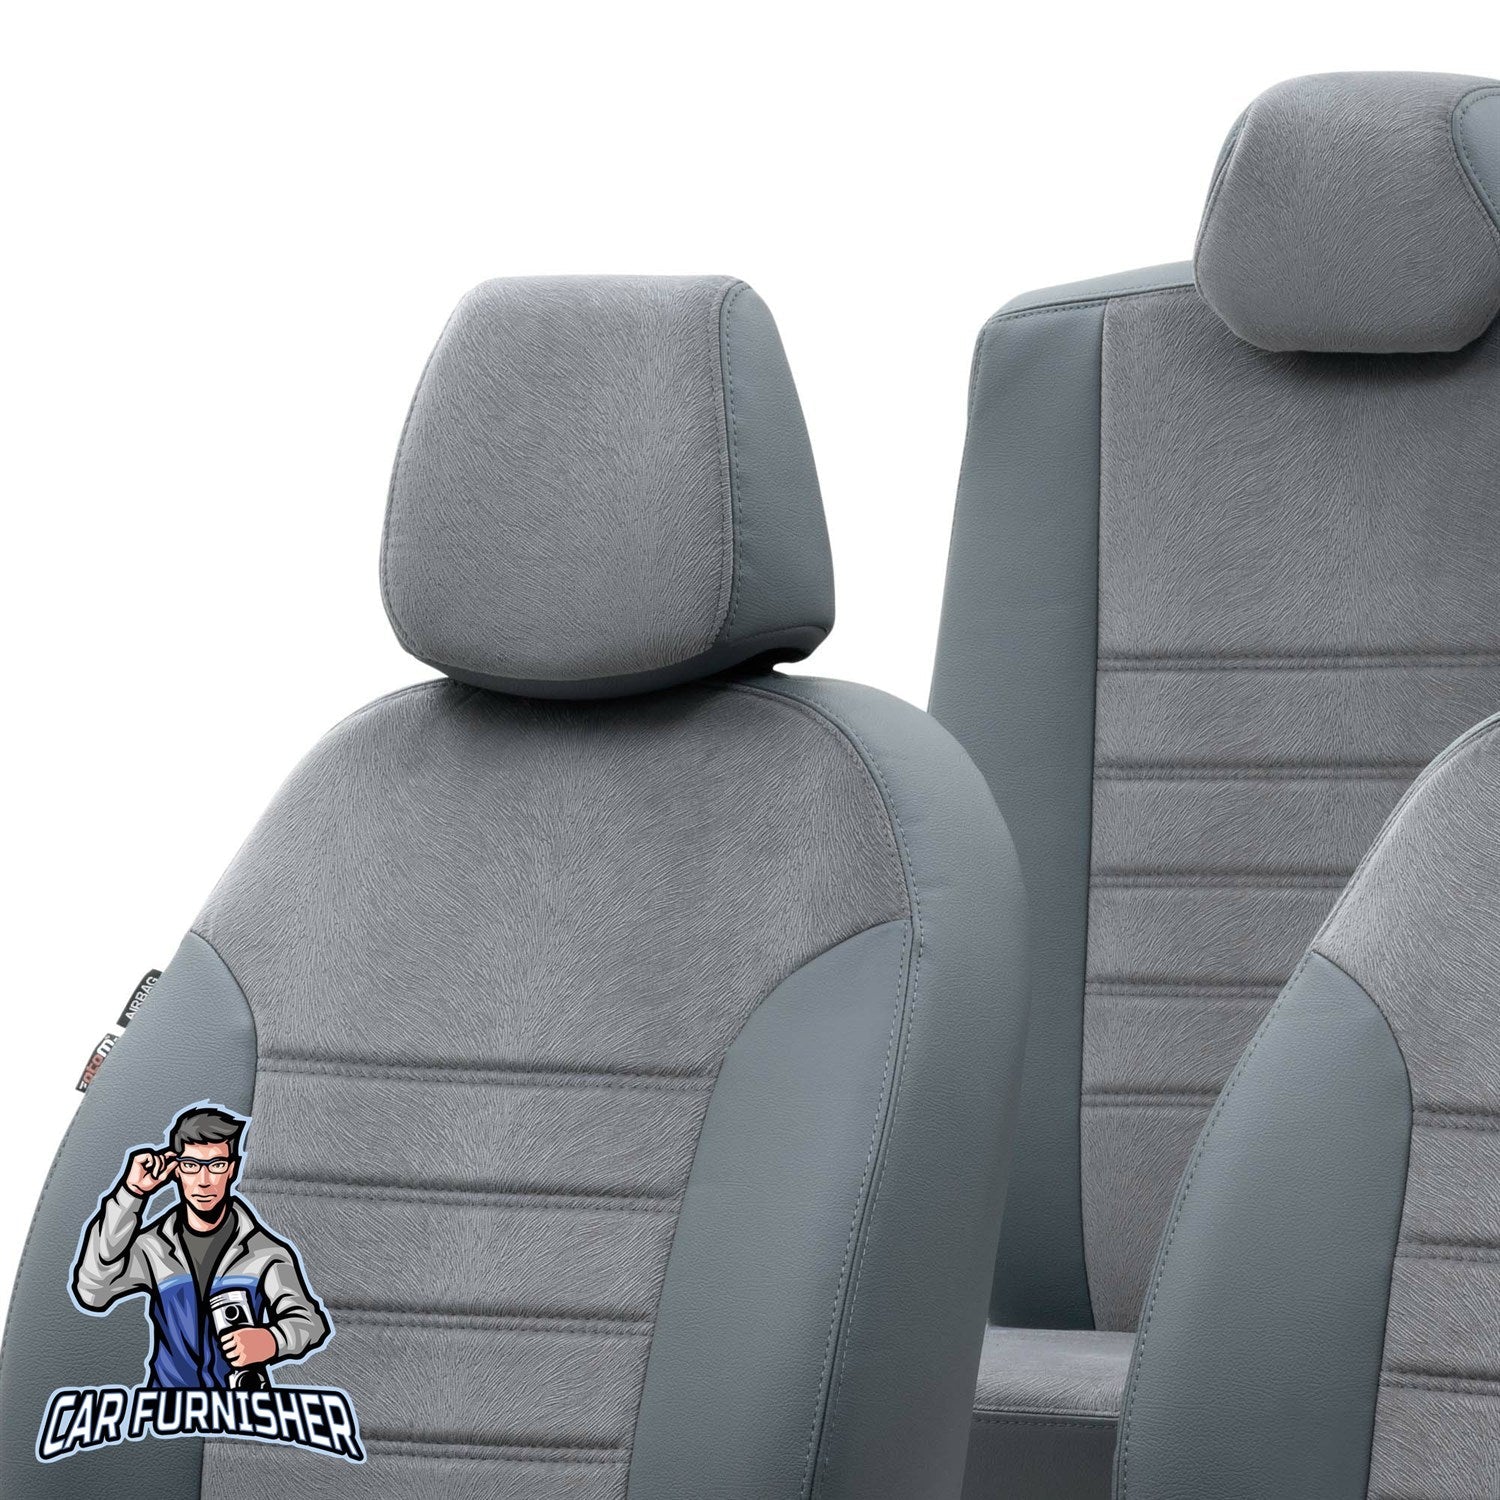 VW Bora Car Seat Cover 1998-2006 1J London Design Smoked Black Full Set (5 Seats + Handrest) Leather & Fabric